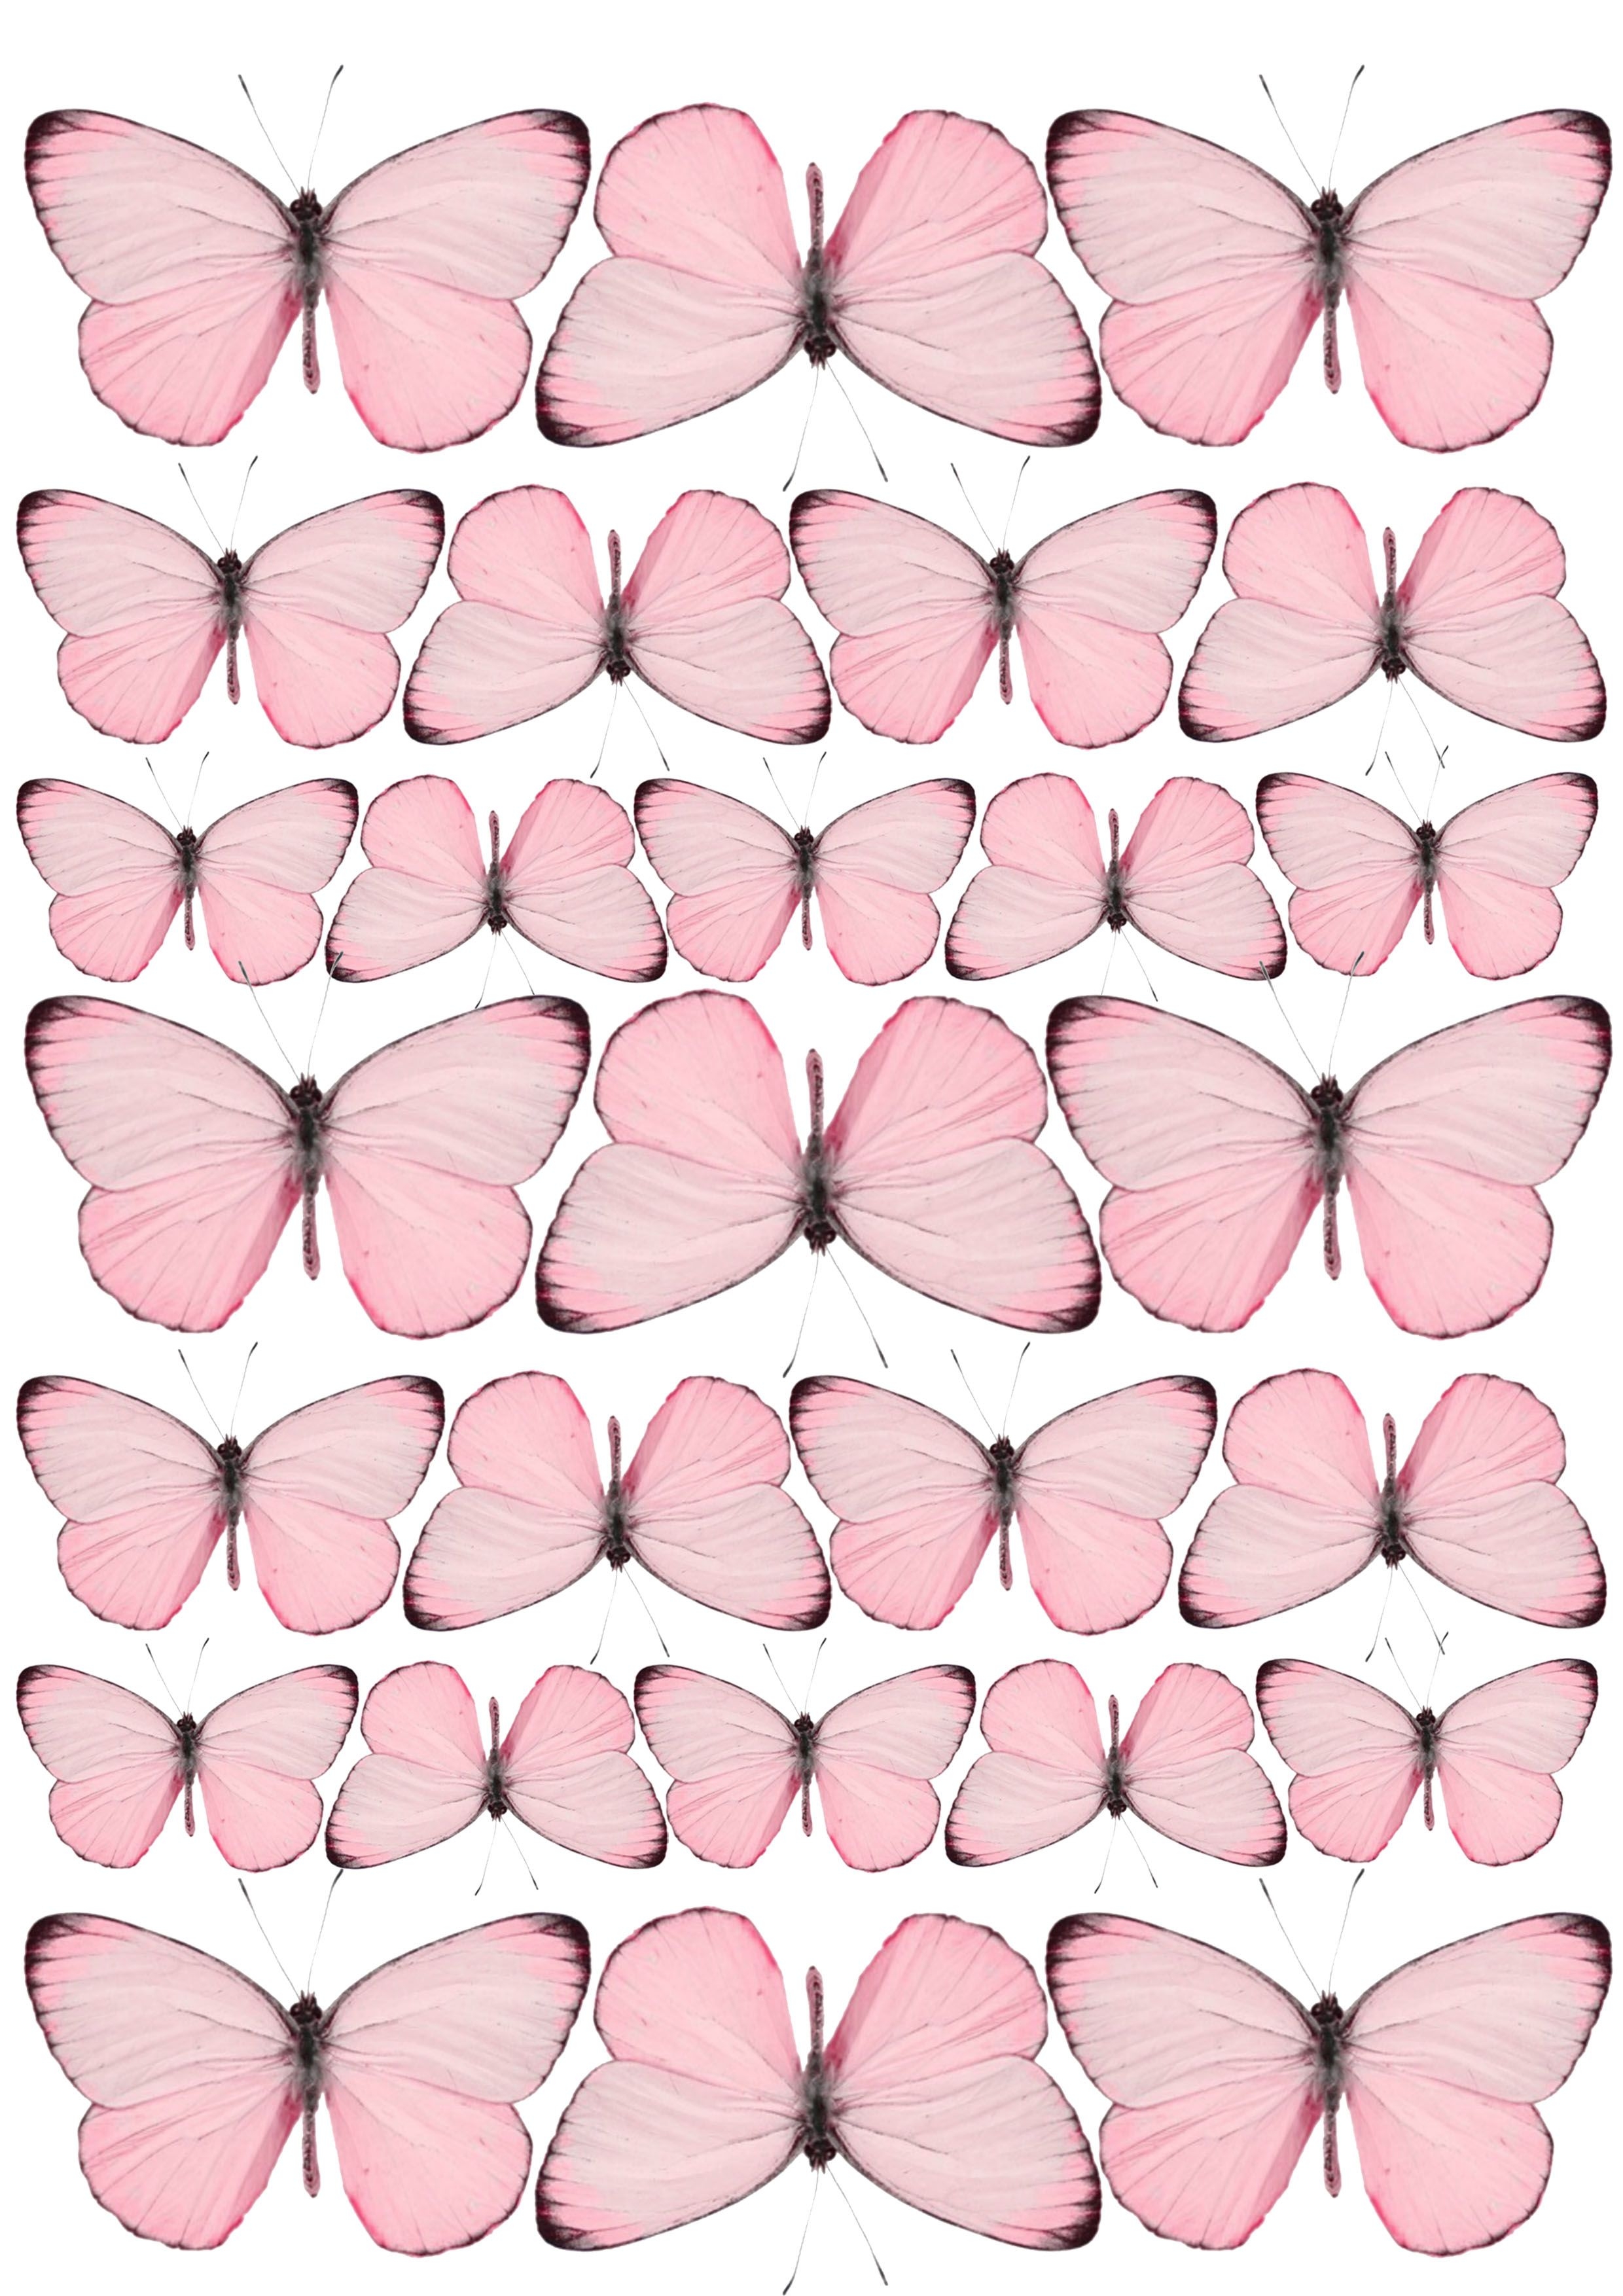 Бабочки розовые распечатать. Розовые бабочки. Бабочки бело розовые. Бабочки бело розовые для печати. Розовые бабочки на белом фоне для печати.